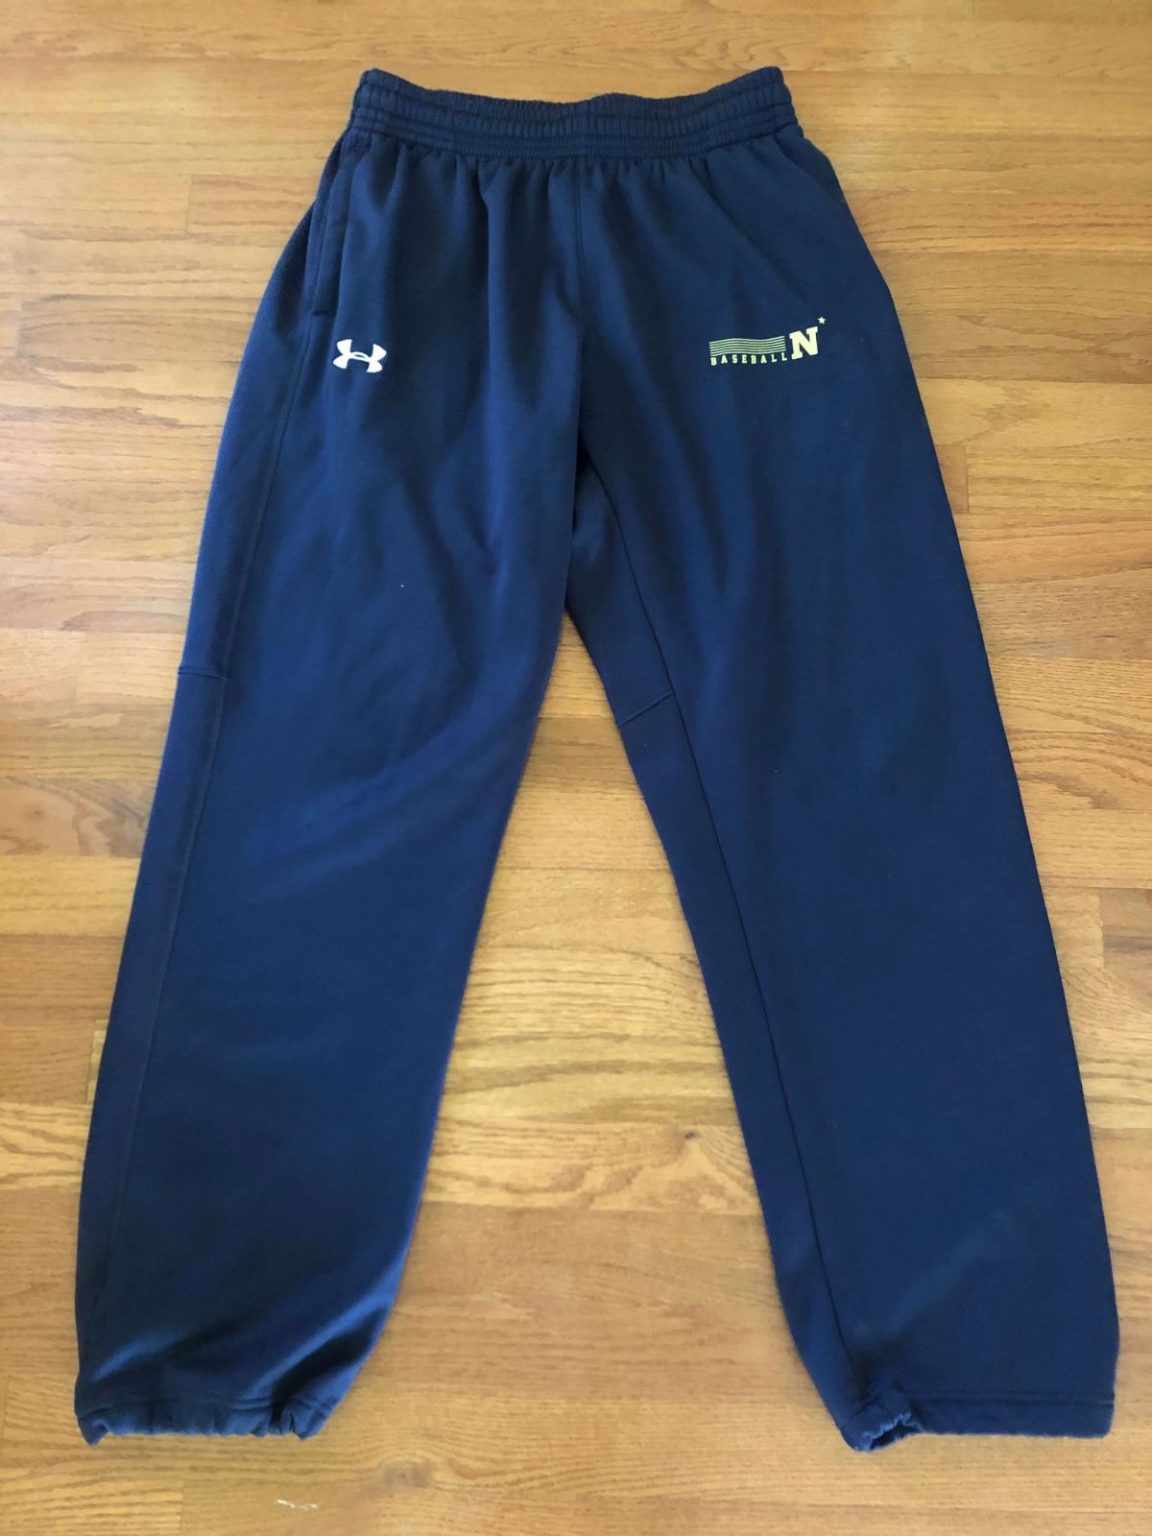 US Naval Academy Sweatpants : NARP Clothing